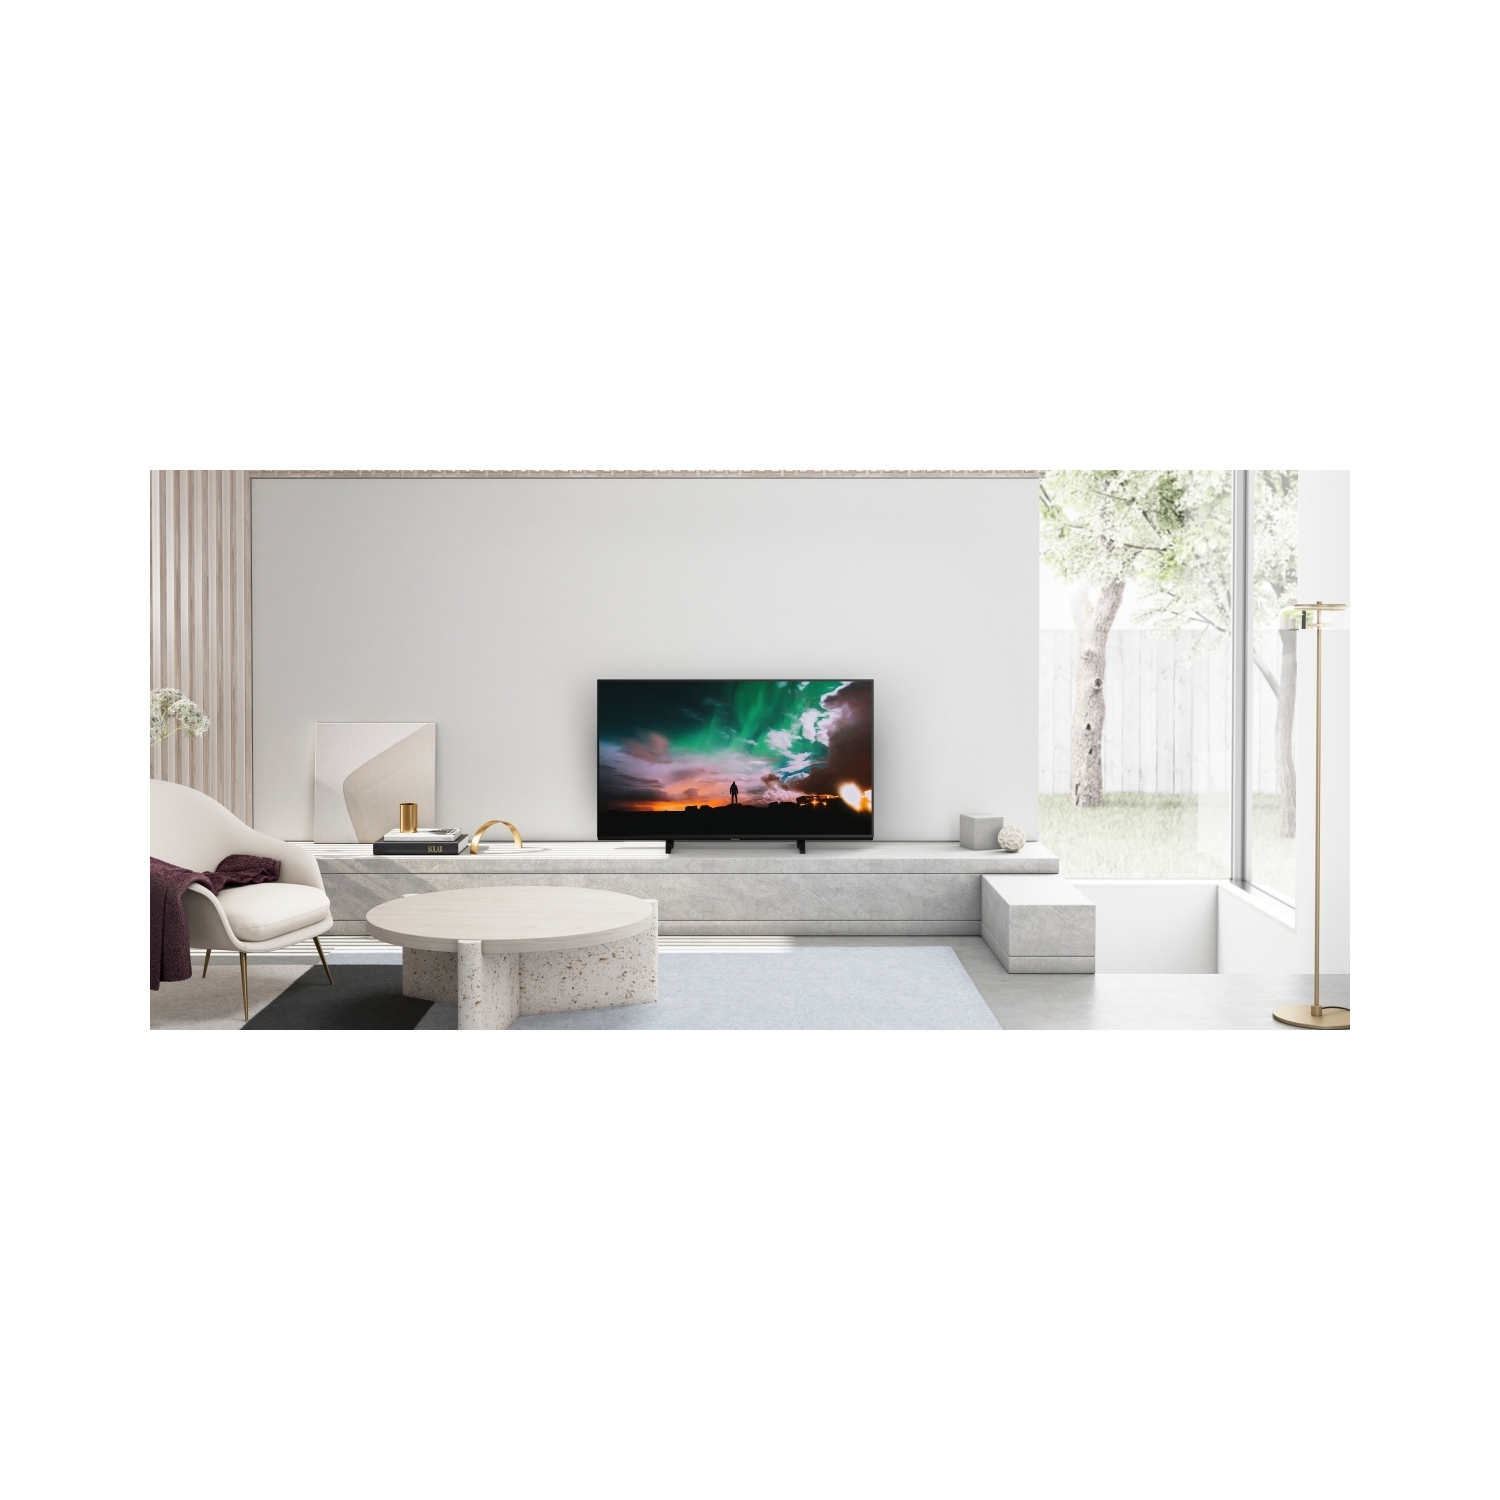 TX48JZ980B 48" OLED 4K HDR Smart TV - 0